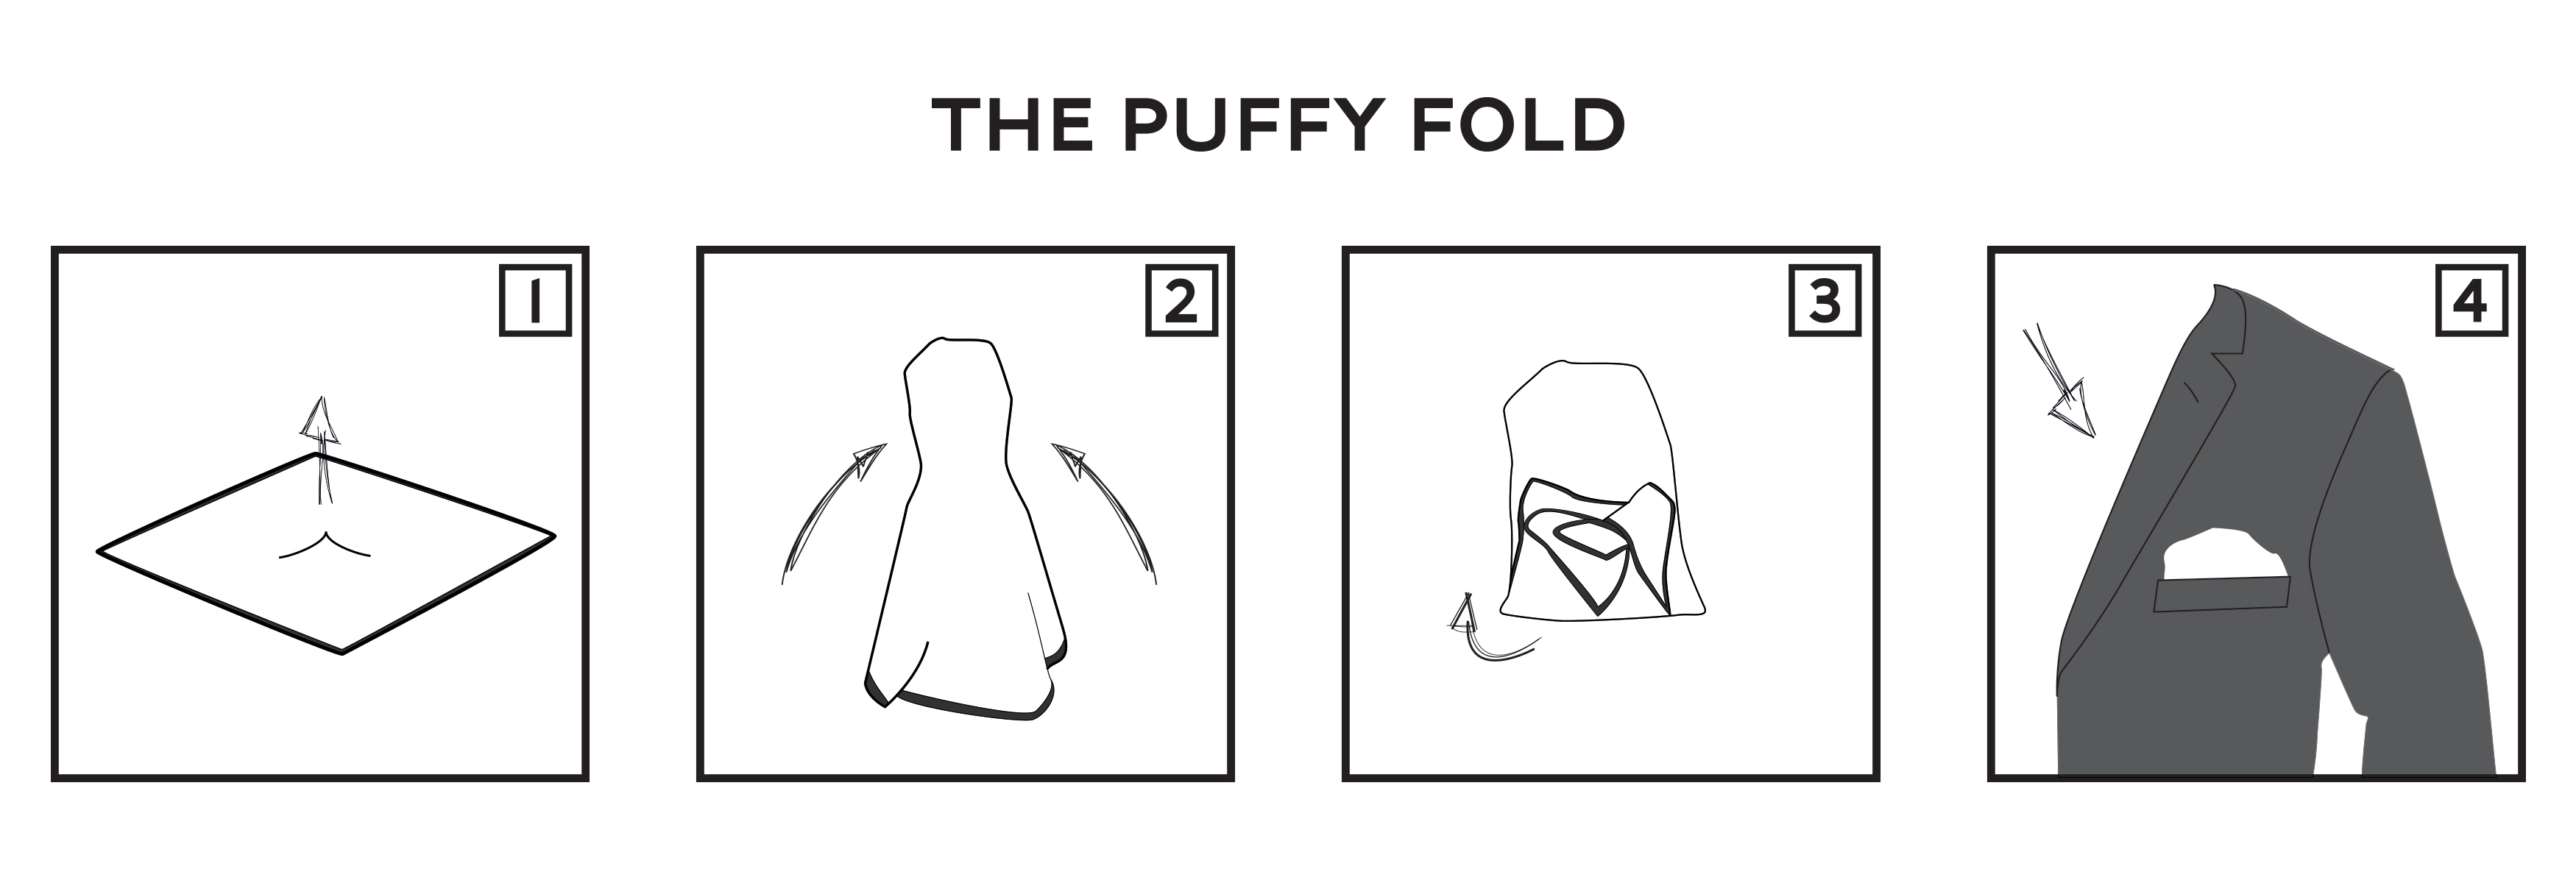 Puffy Fold